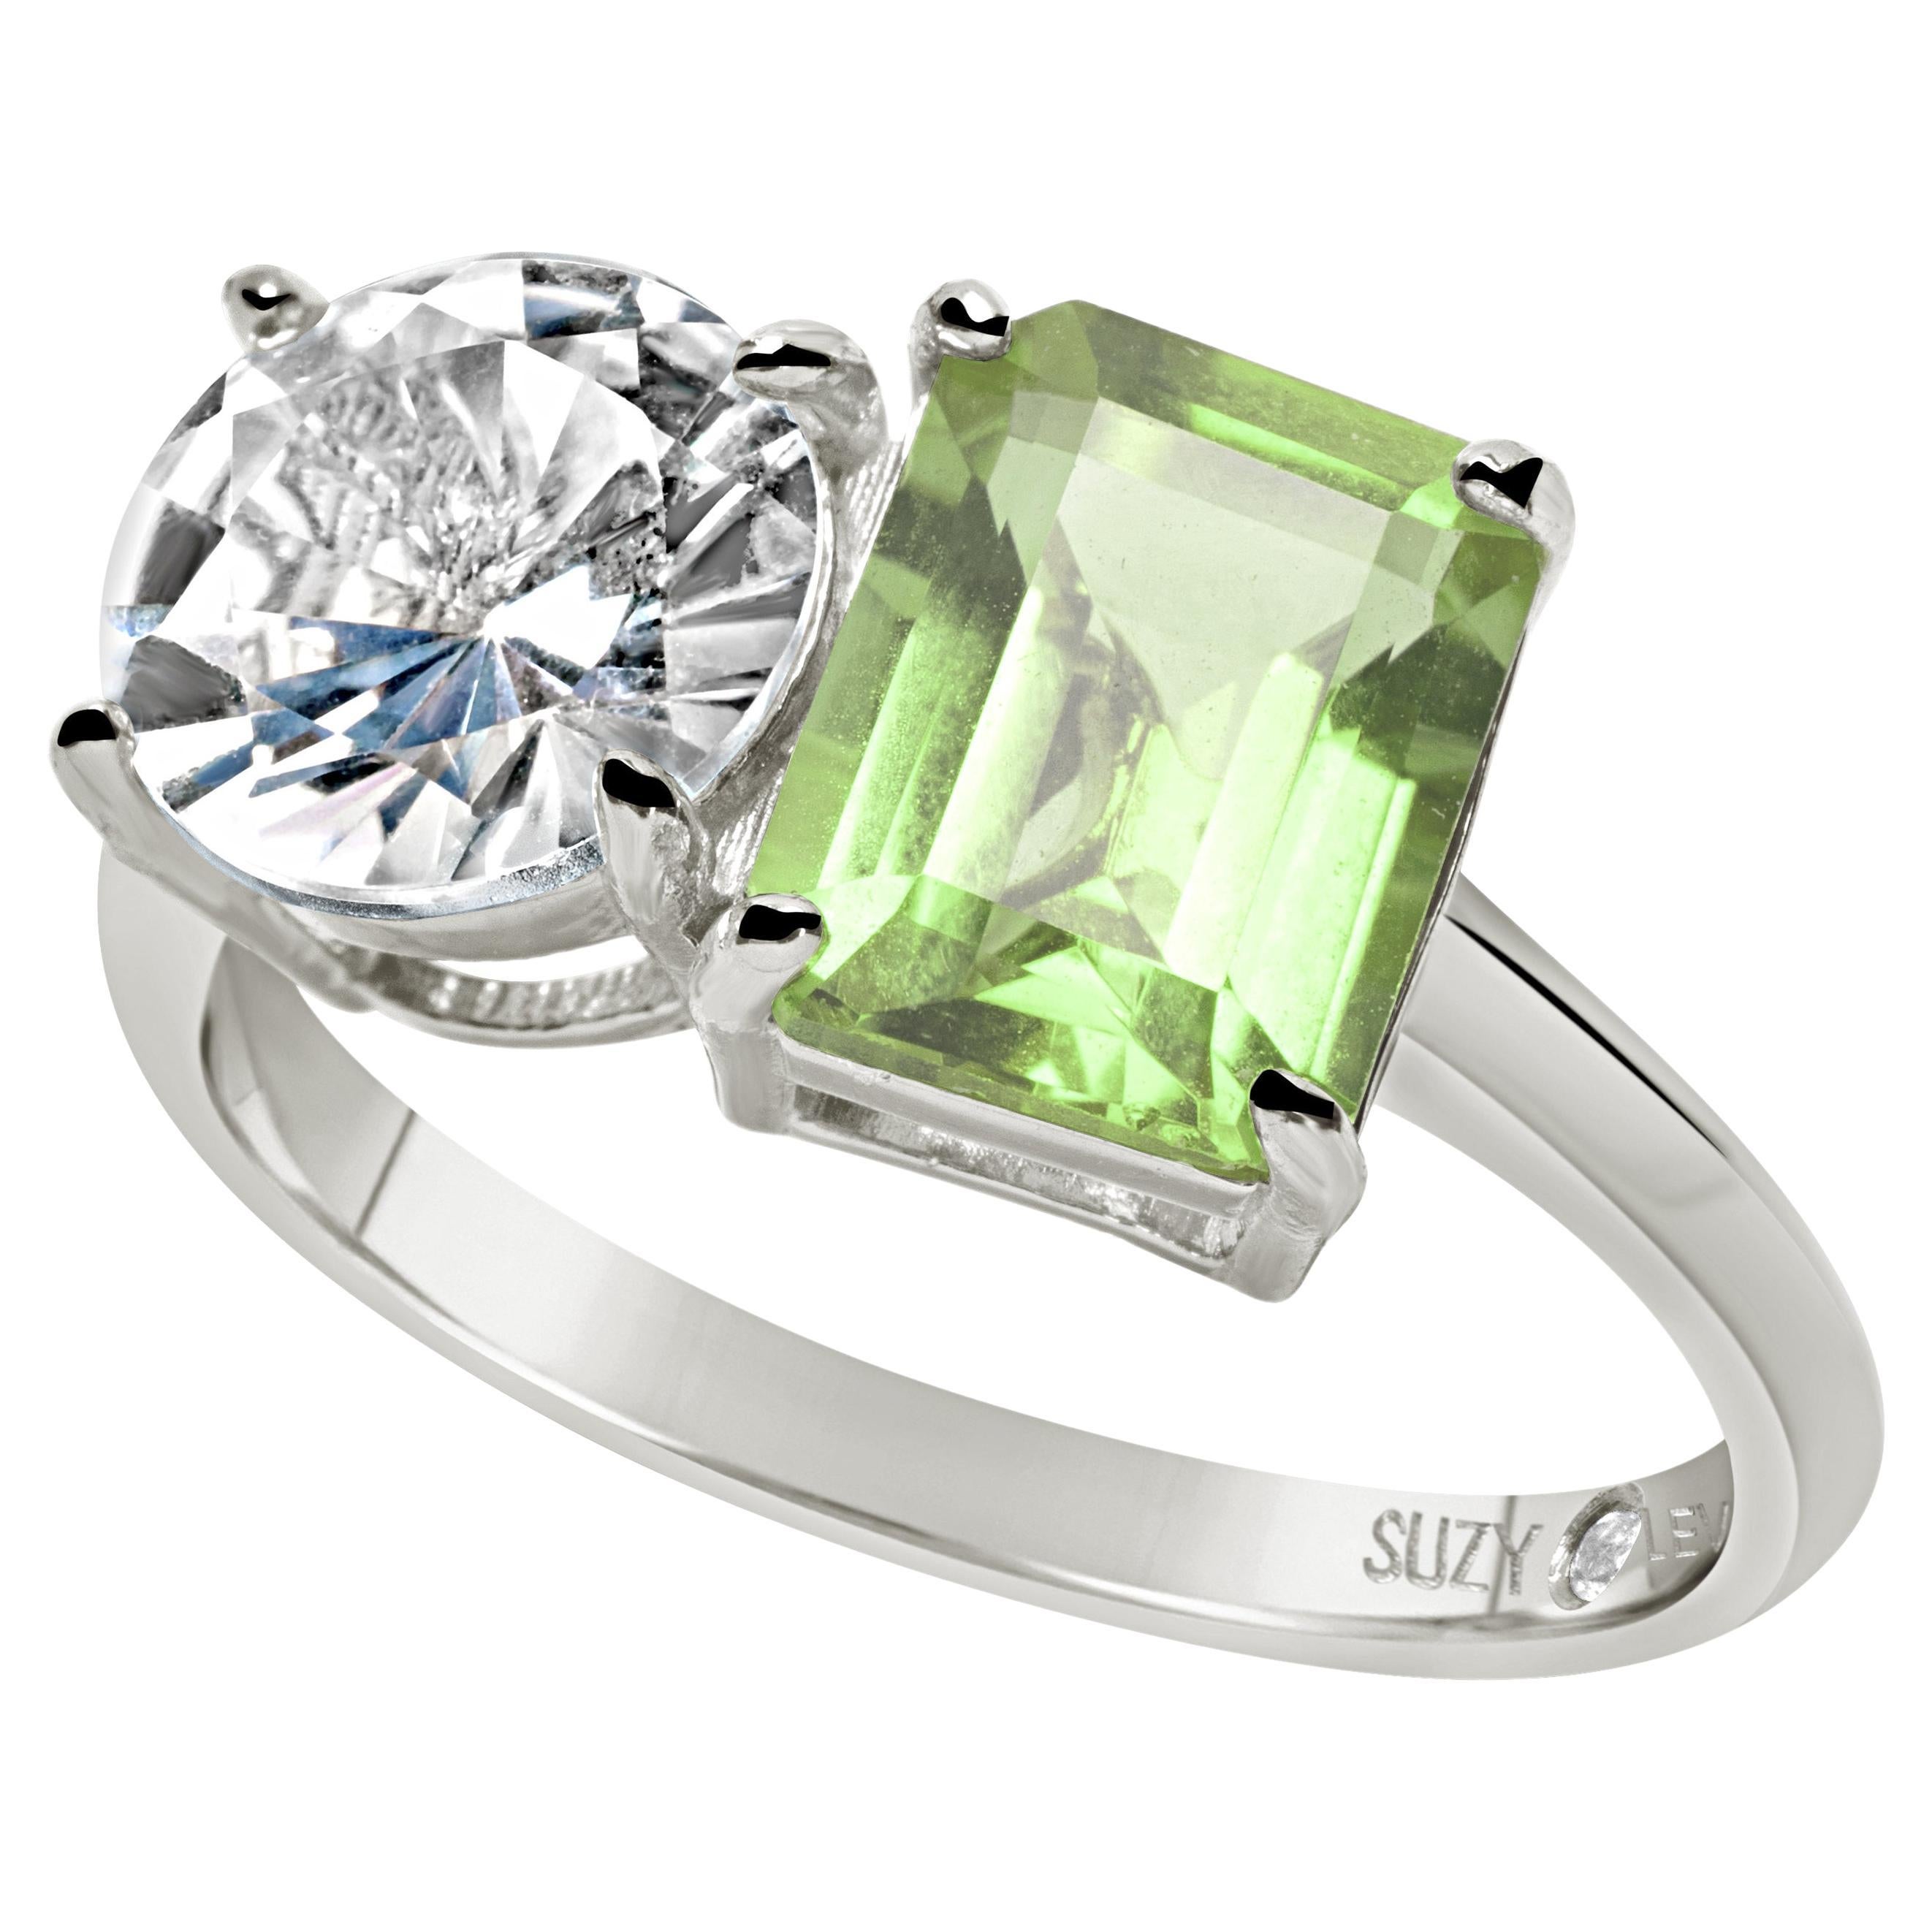 Suzy Levian Sterling Silver White Topaz & Green Amethyst Two Stone Ring (bague à deux pierres en argent)